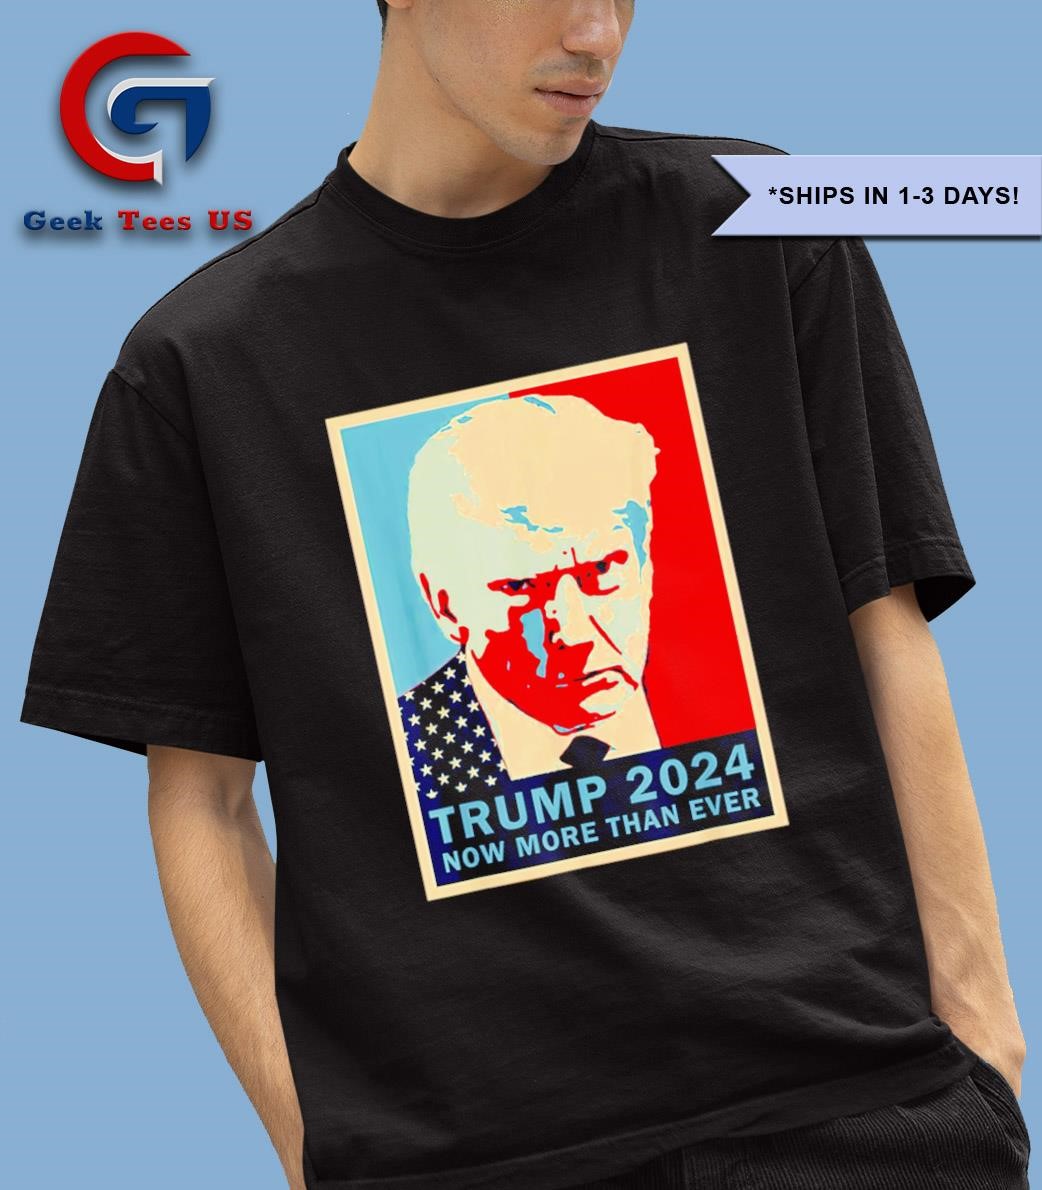 Trump 2024 mugshot now more then ever portrait shirt
Website: geekteesus.com
 #shirt #trending #gift #geekteesus #geekshirt #GEEKS #Trump #DonaldTrumpFAILEDAmerica #donaldtrump #mugshot #USAflag